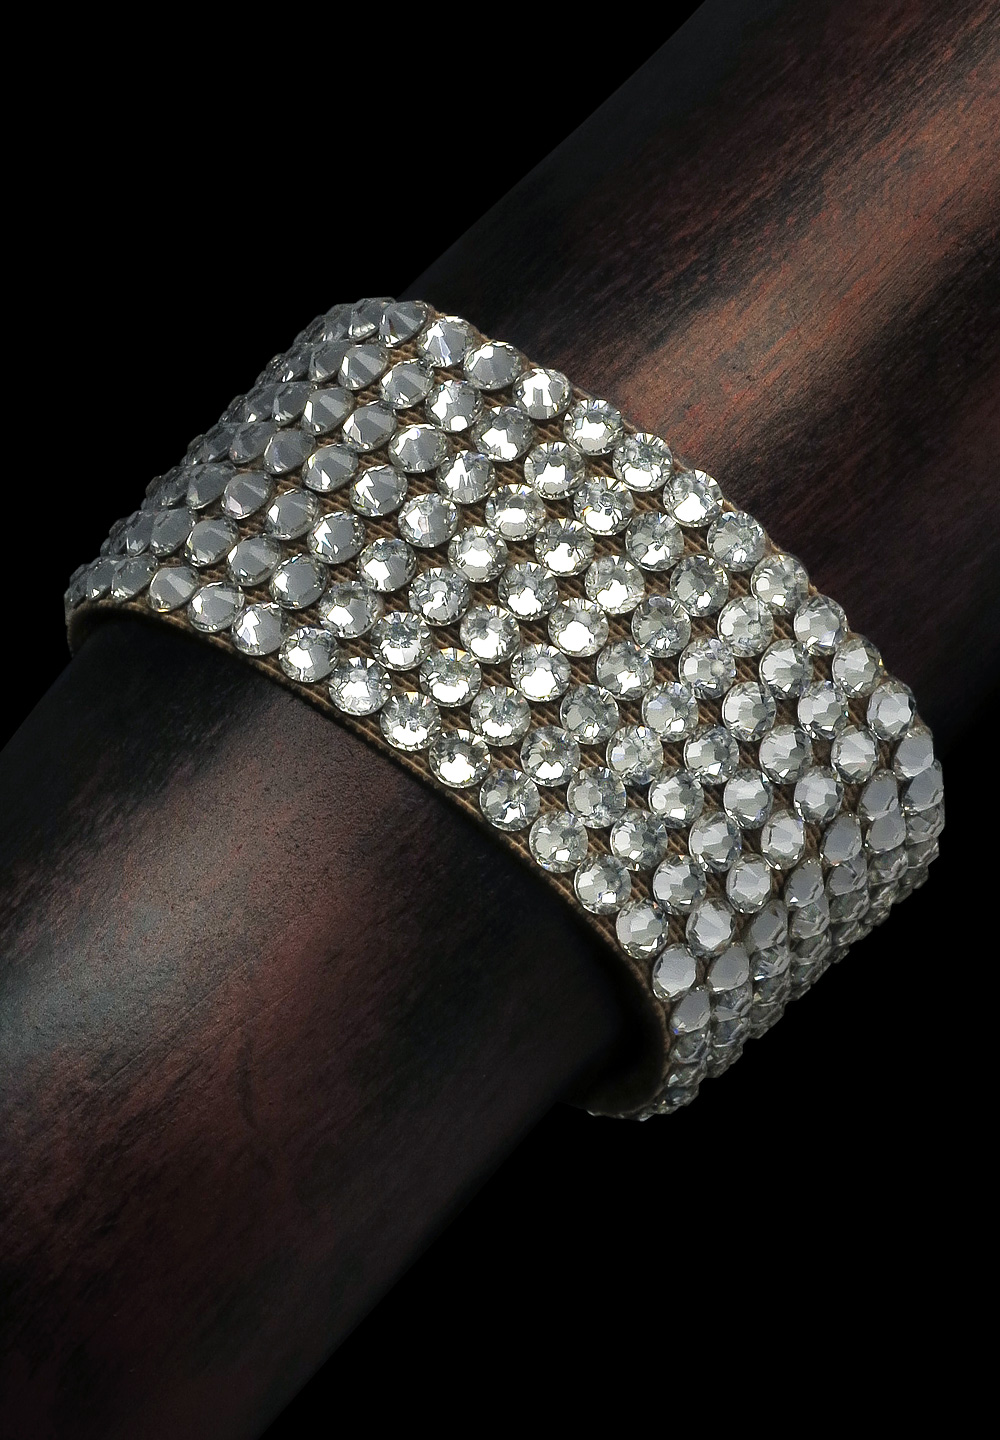 Hot 2 In 1 Magic Ring Change Bracelet Telescopic AB Crystal Women Jewellery  Gift | eBay